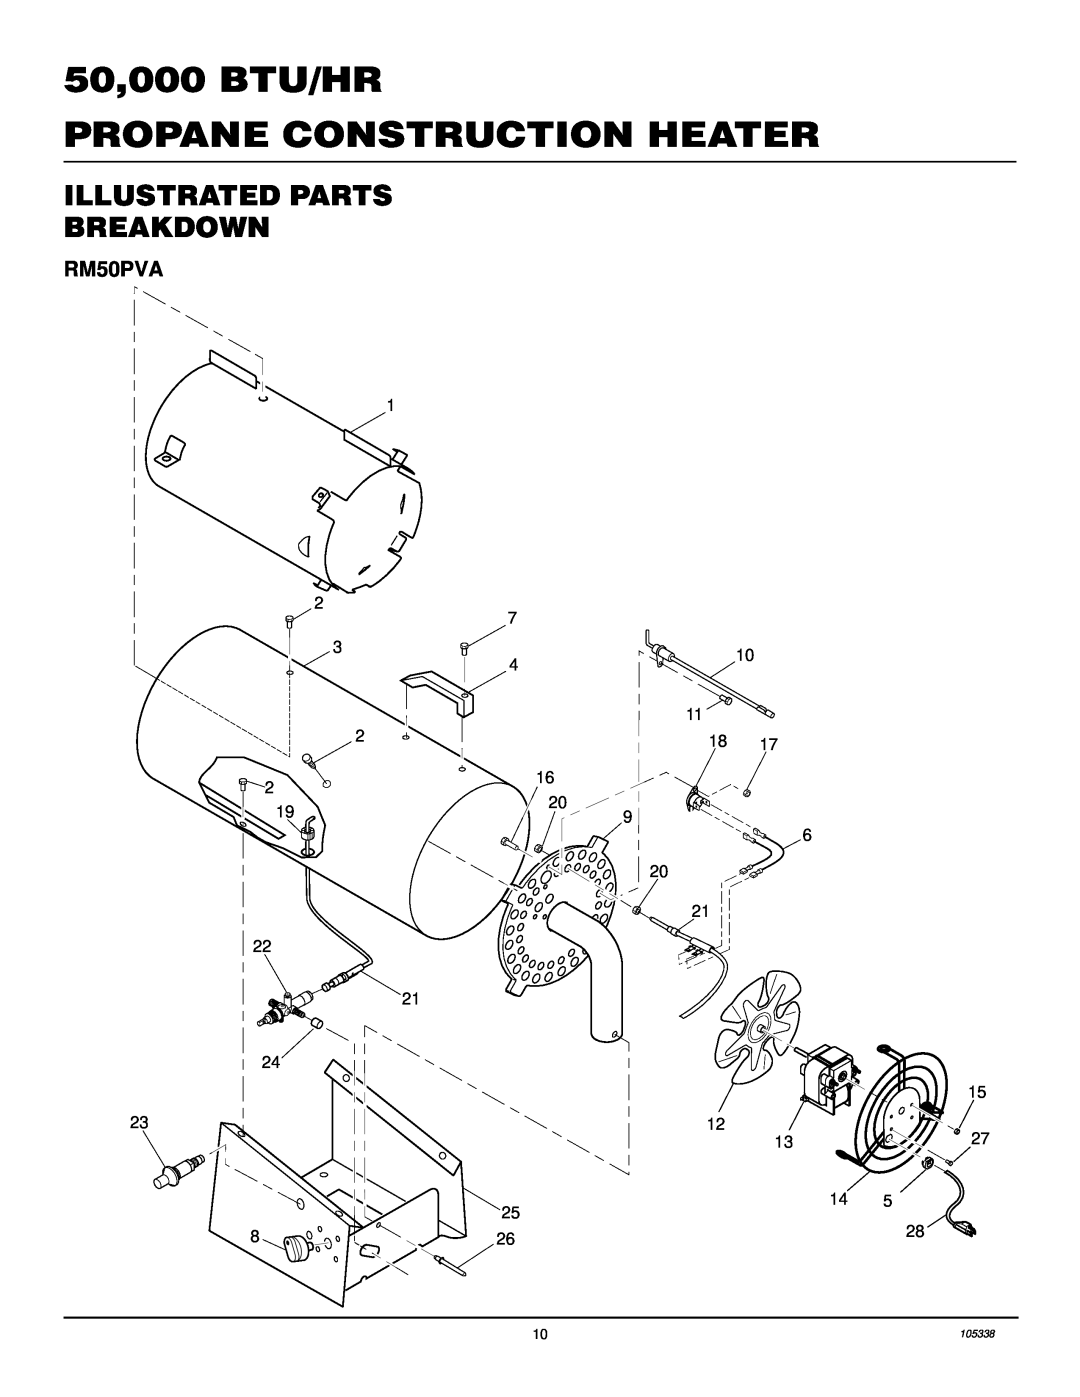 Desa RM50PVA owner manual Illustrated Parts Breakdown, 50,000 BTU/HR PROPANE CONSTRUCTION HEATER 